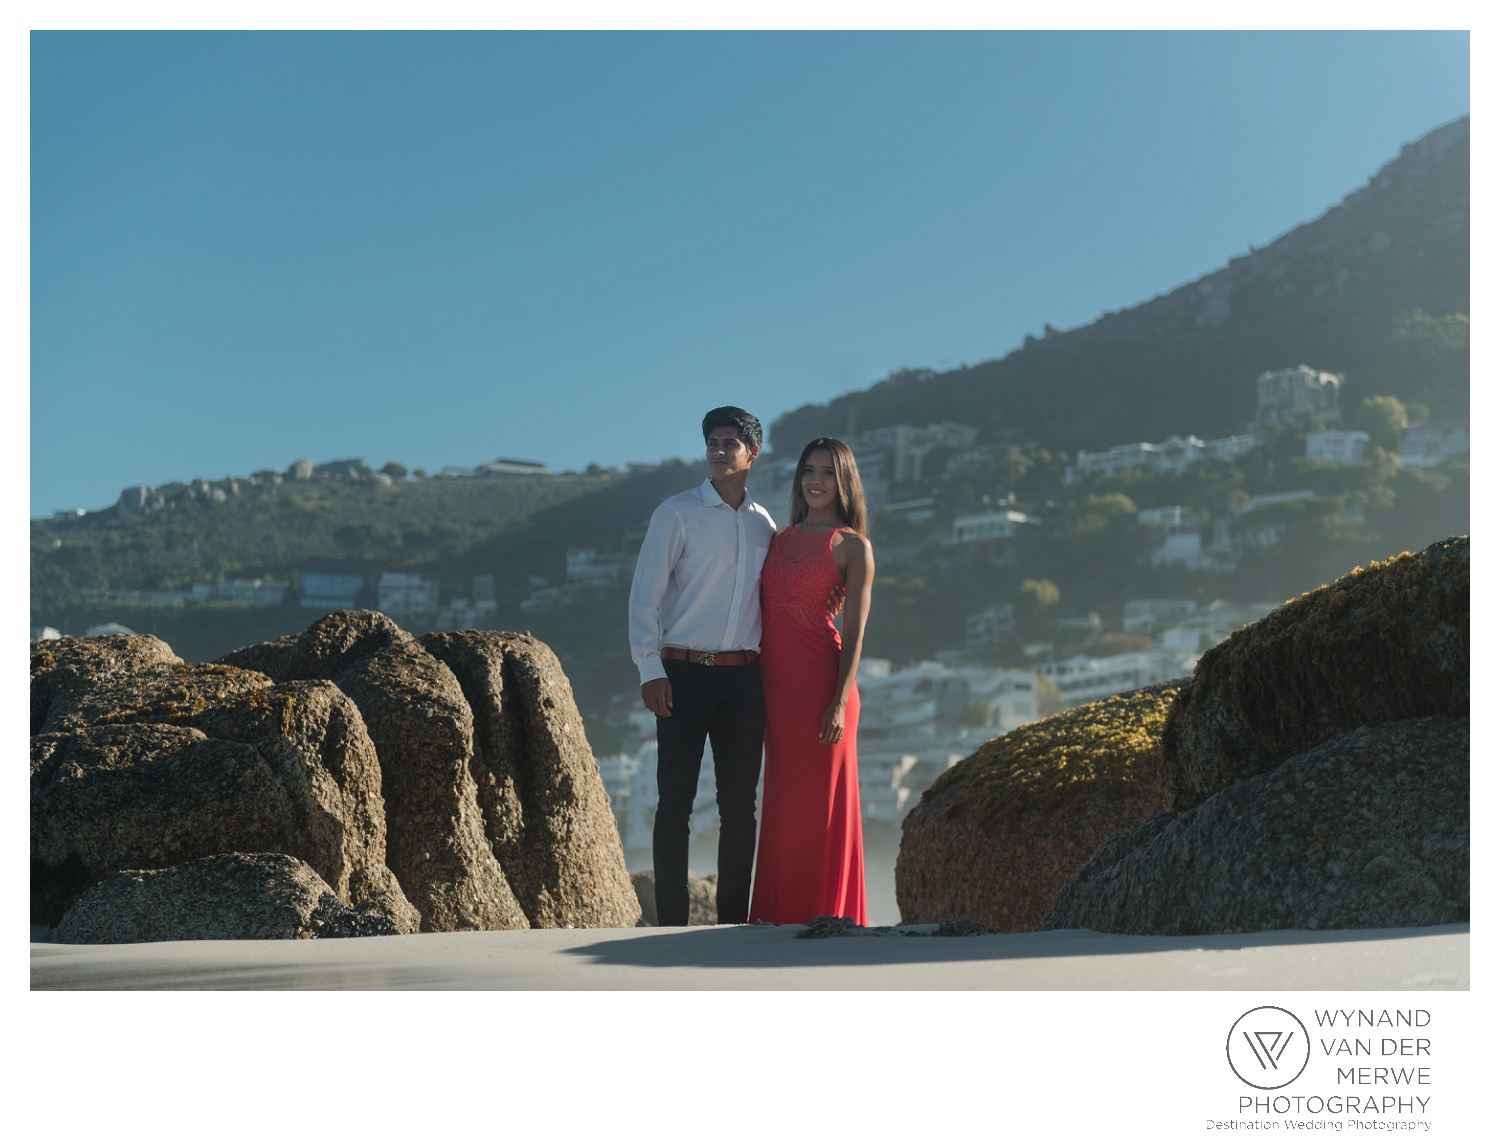 WvdM_engagementshoot_engaged_couple_prewedding_llandudno_cliftonbeach_beach_formal_southafrica_weddingphotographer_greernicolas-109.jpg